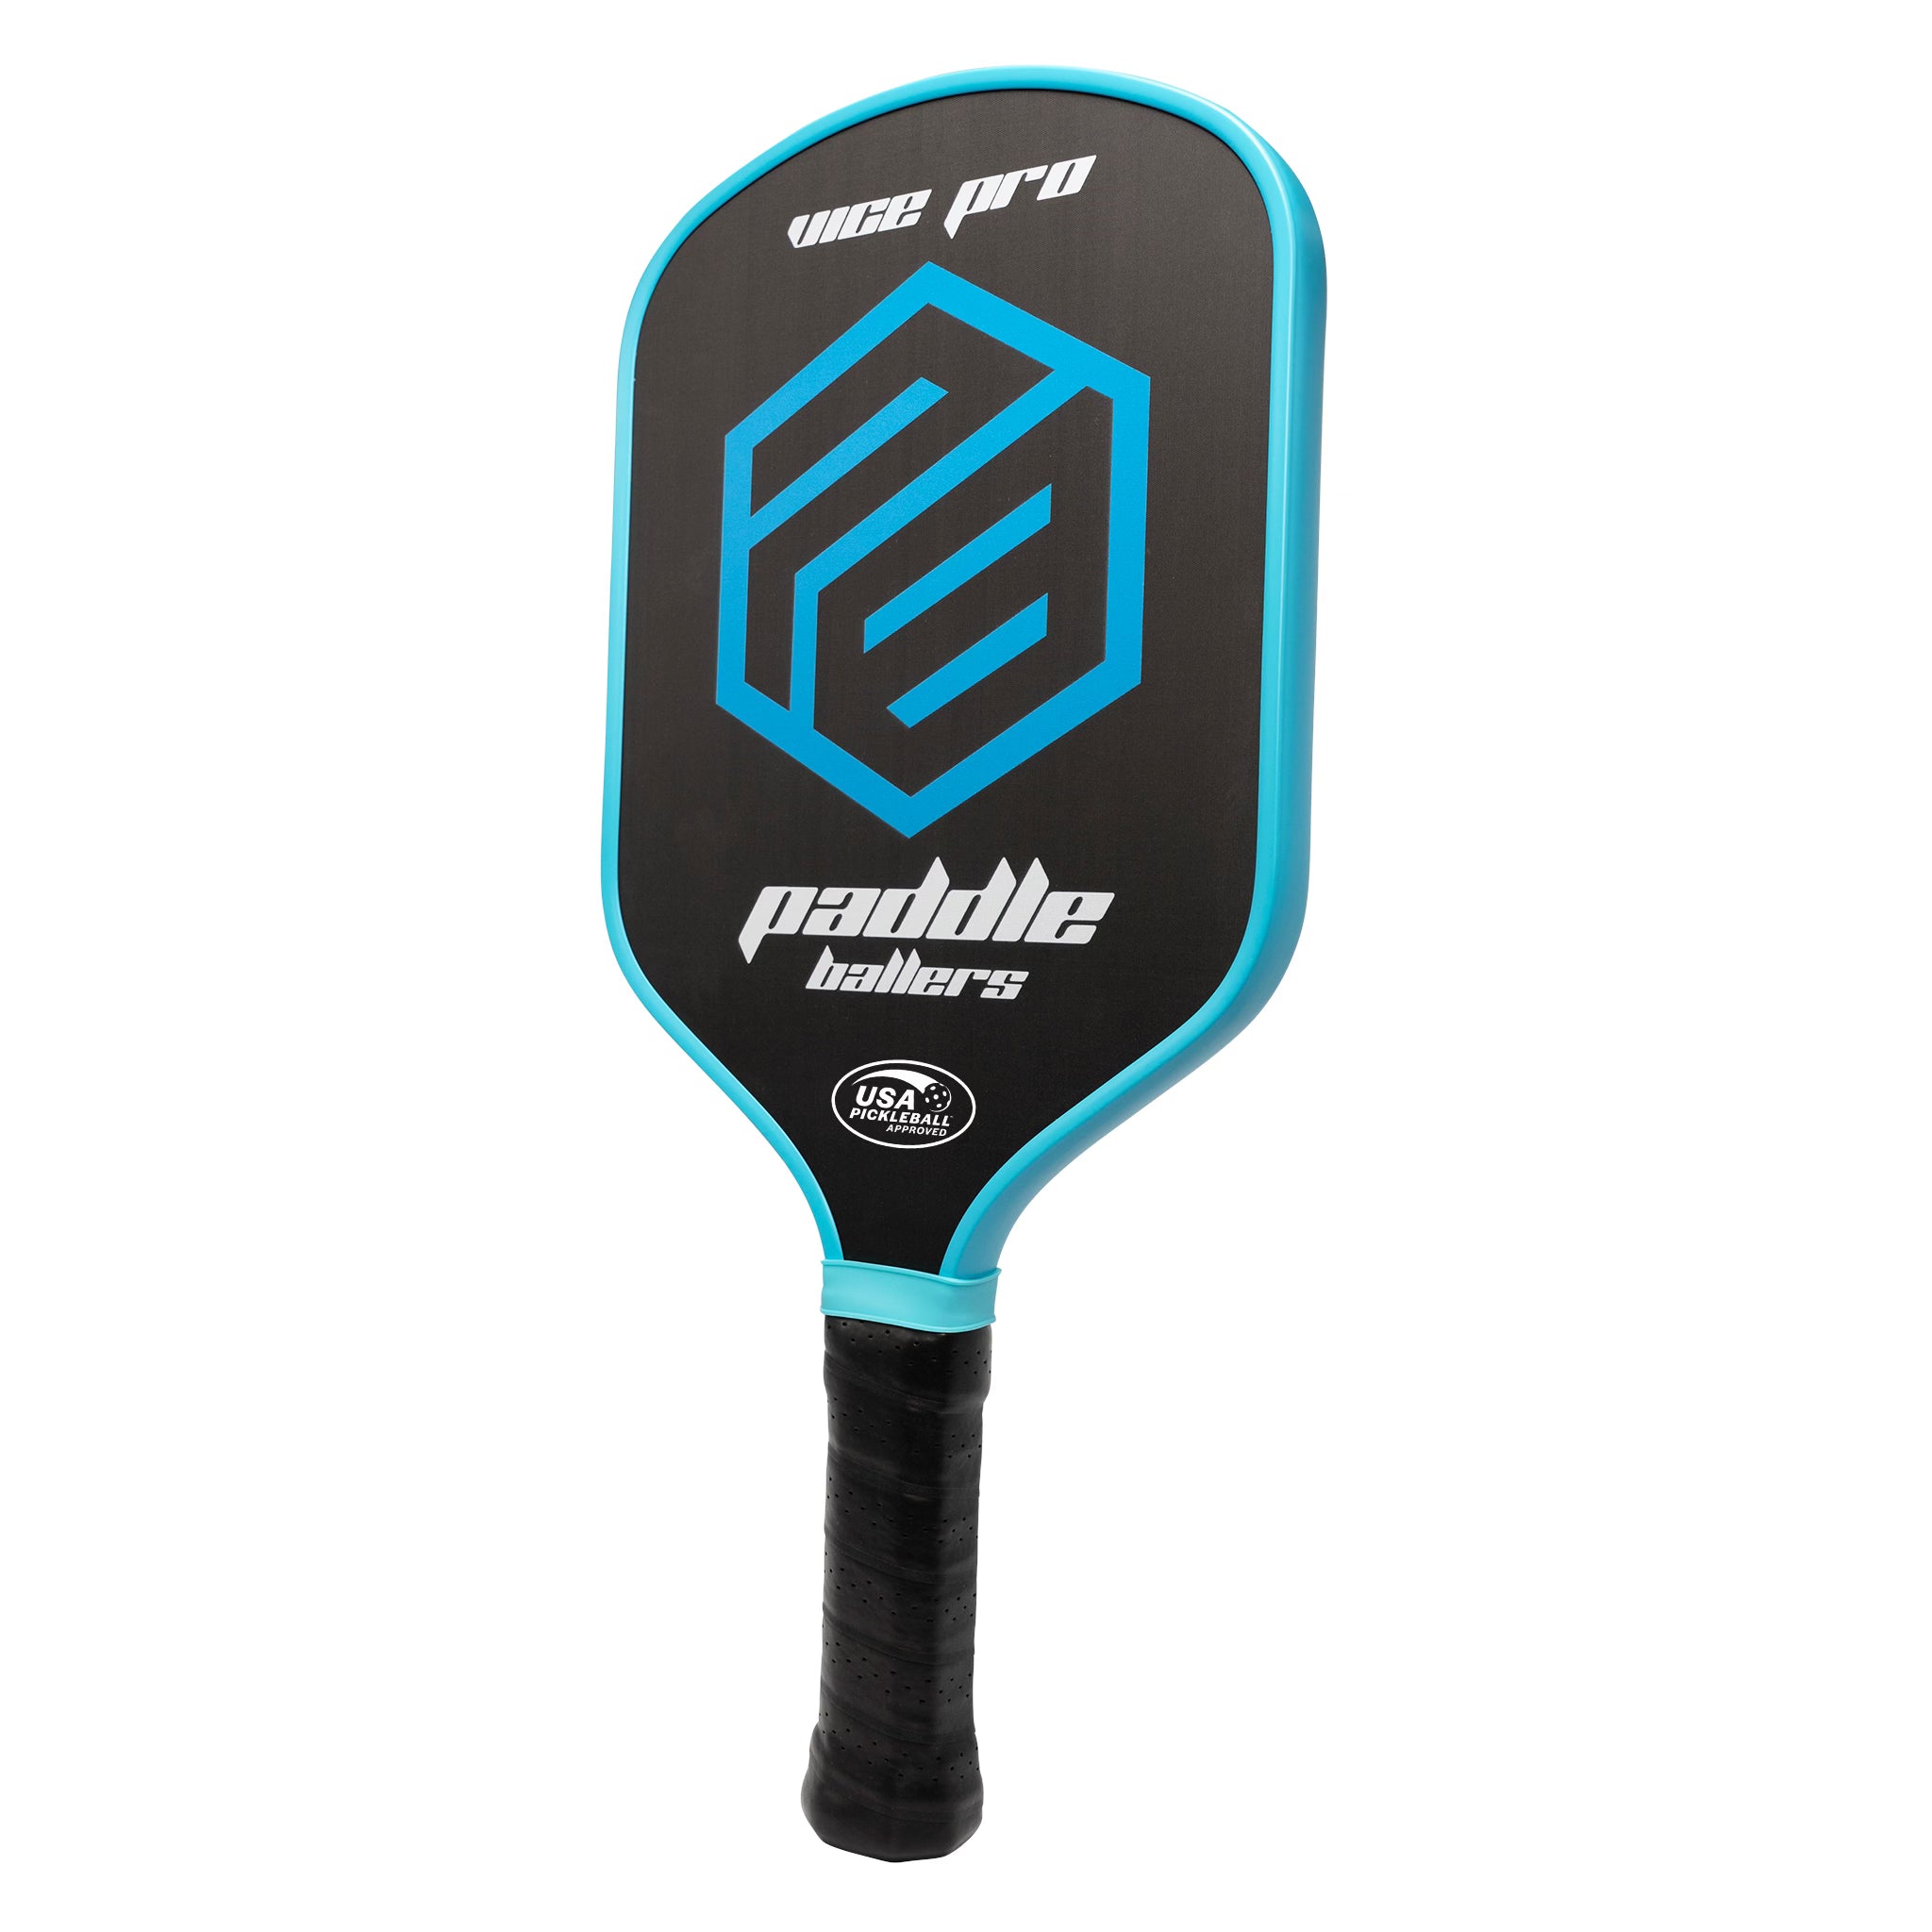 Vice Pro™ Carbon Fiber Pickleball Paddle